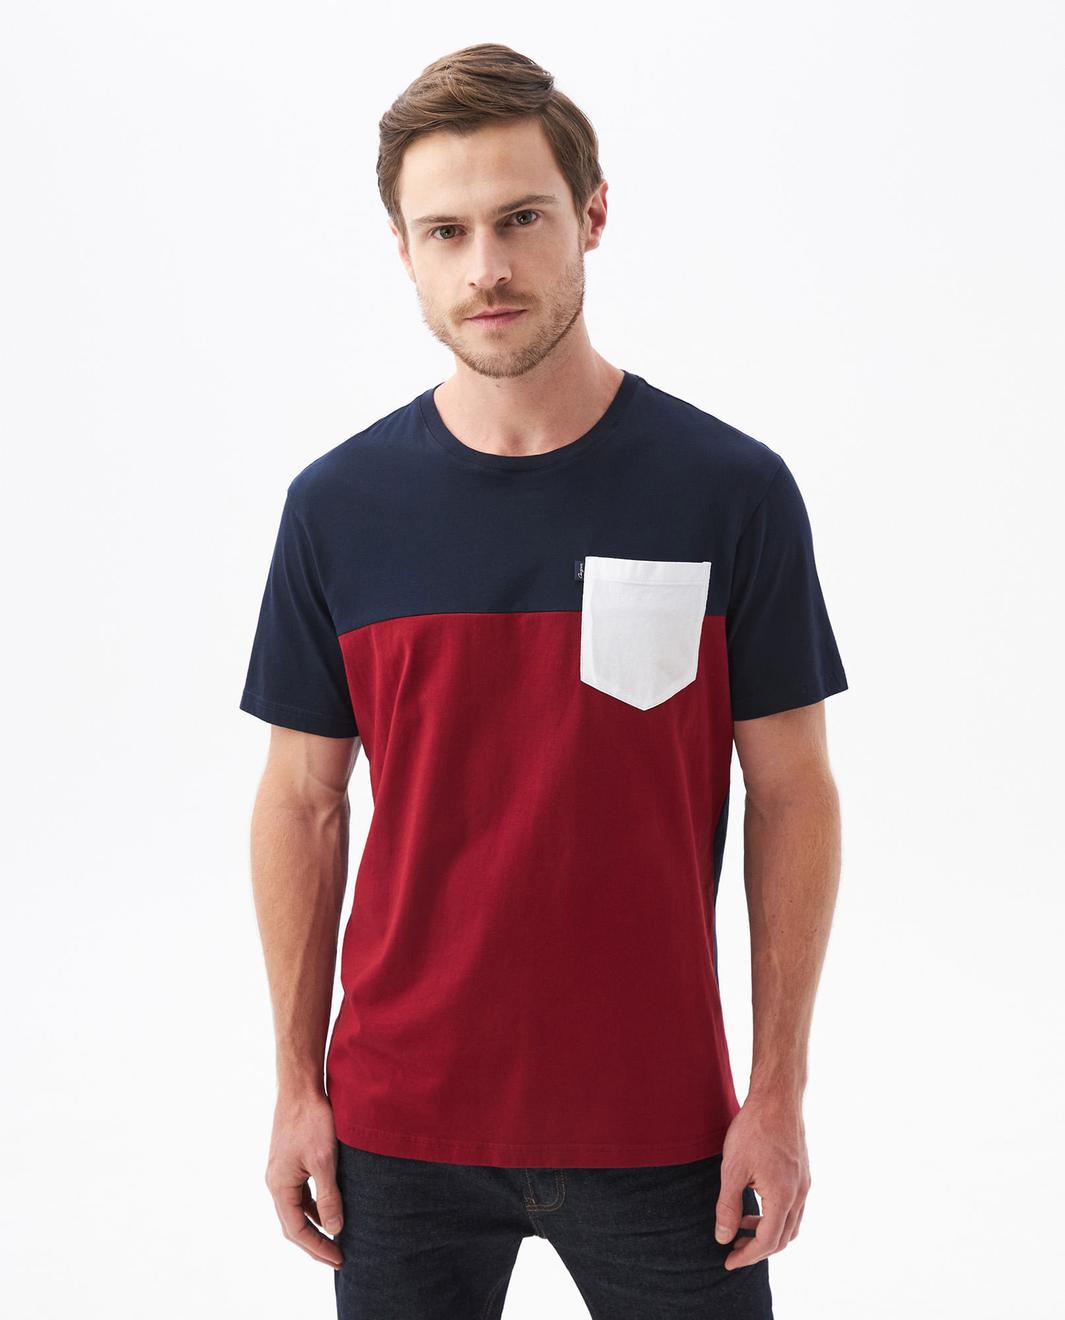 Oferta de Camiseta de Hombre, Classic Fit Cuello Redondo - Bloques de Color + Bolsillo por $111930 en Chevignon